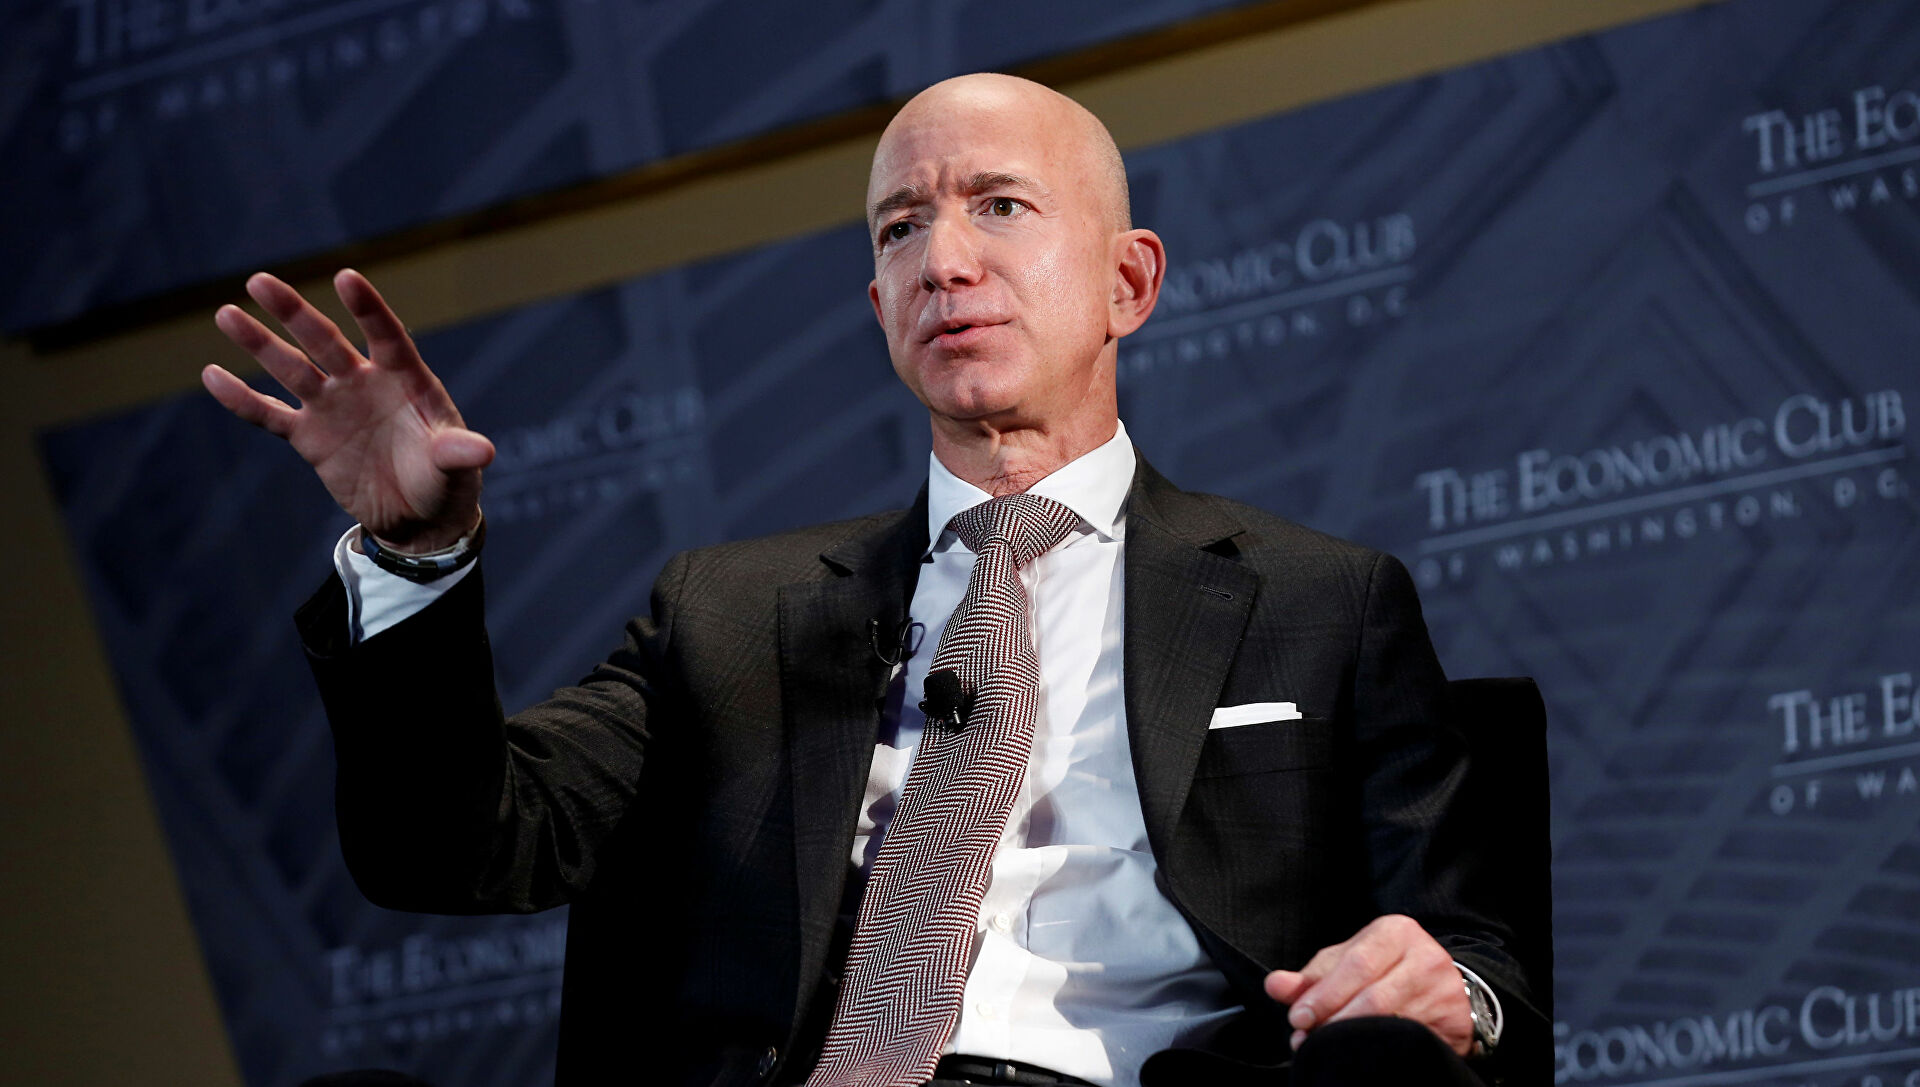 Jeff Bezos - Amazon